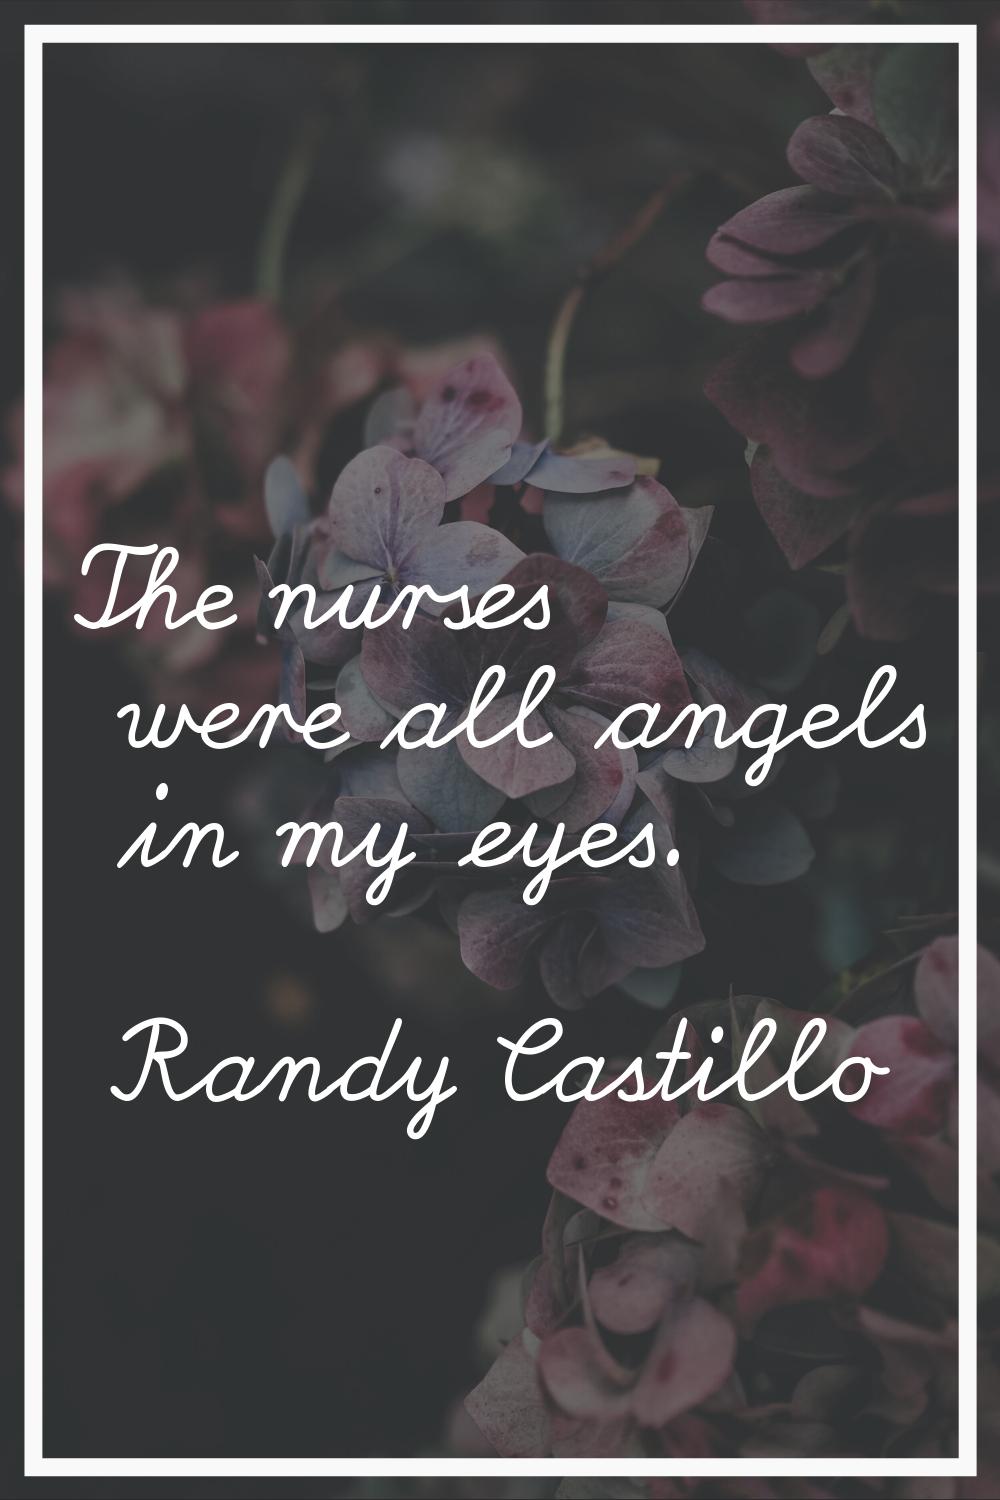 The nurses were all angels in my eyes.